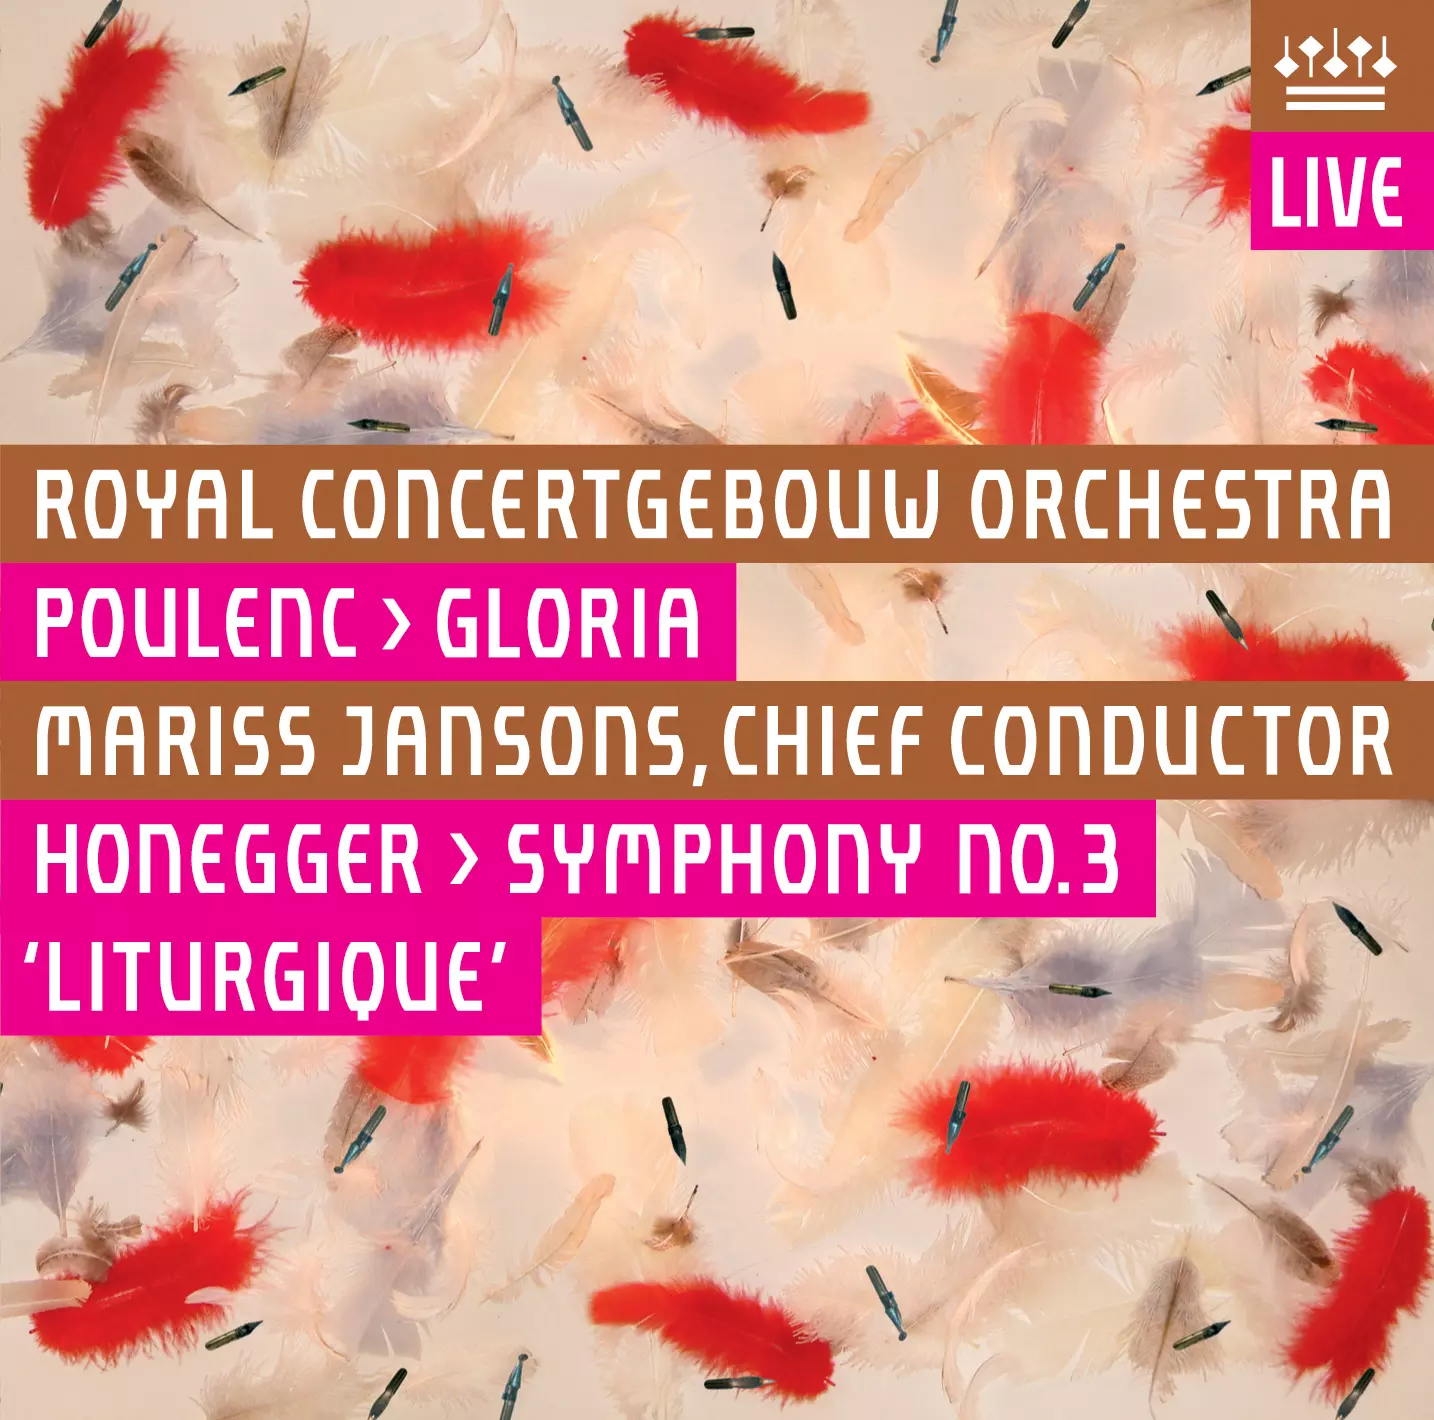 Royal Concertgebouw Orchestra, Poulenc and Honegger